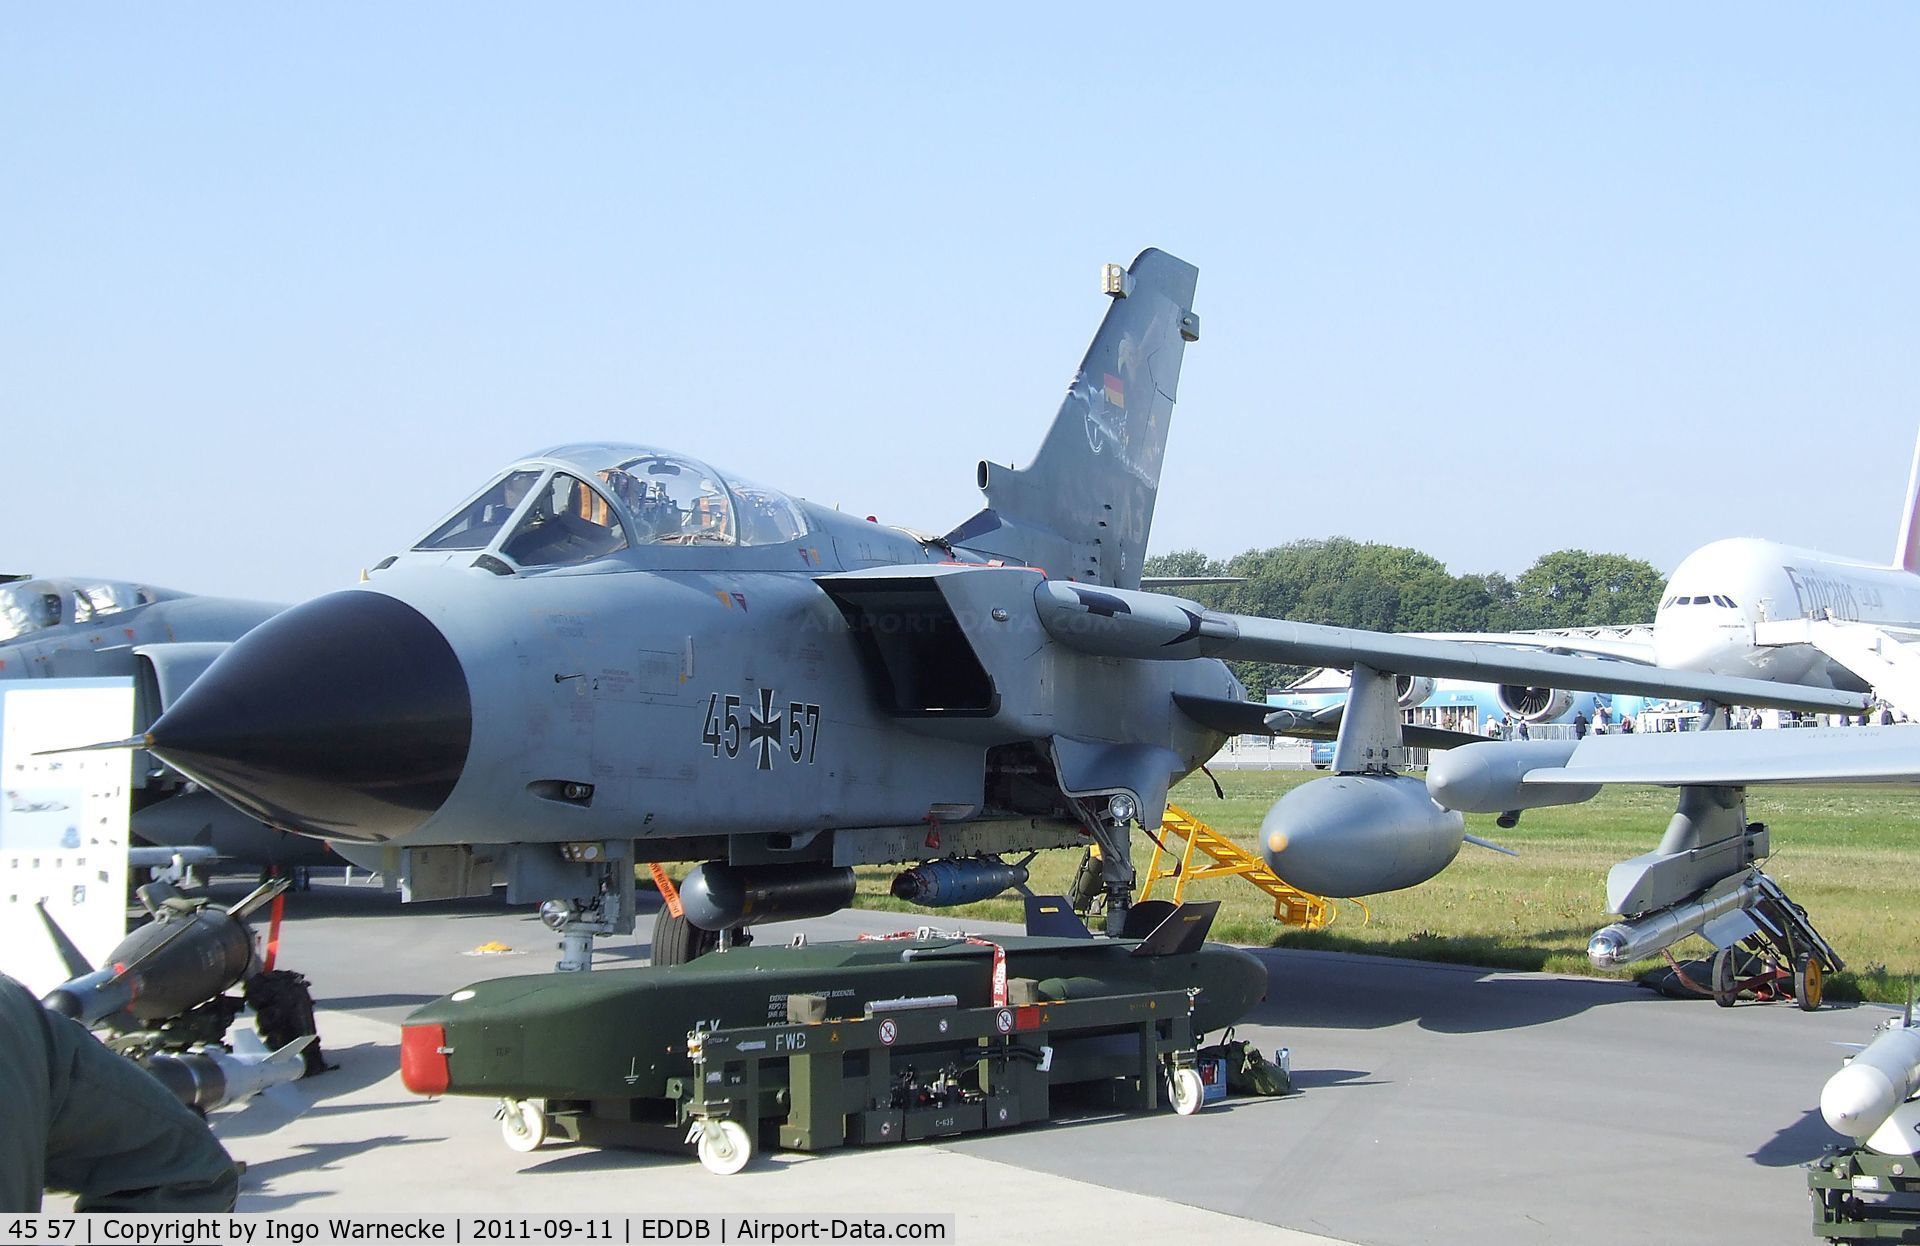 45 57, 1987 Panavia Tornado IDS C/N 648/GS205/4257, Panavia Tornado IDS of the Luftwaffe (German air force) at the ILA 2012, Berlin